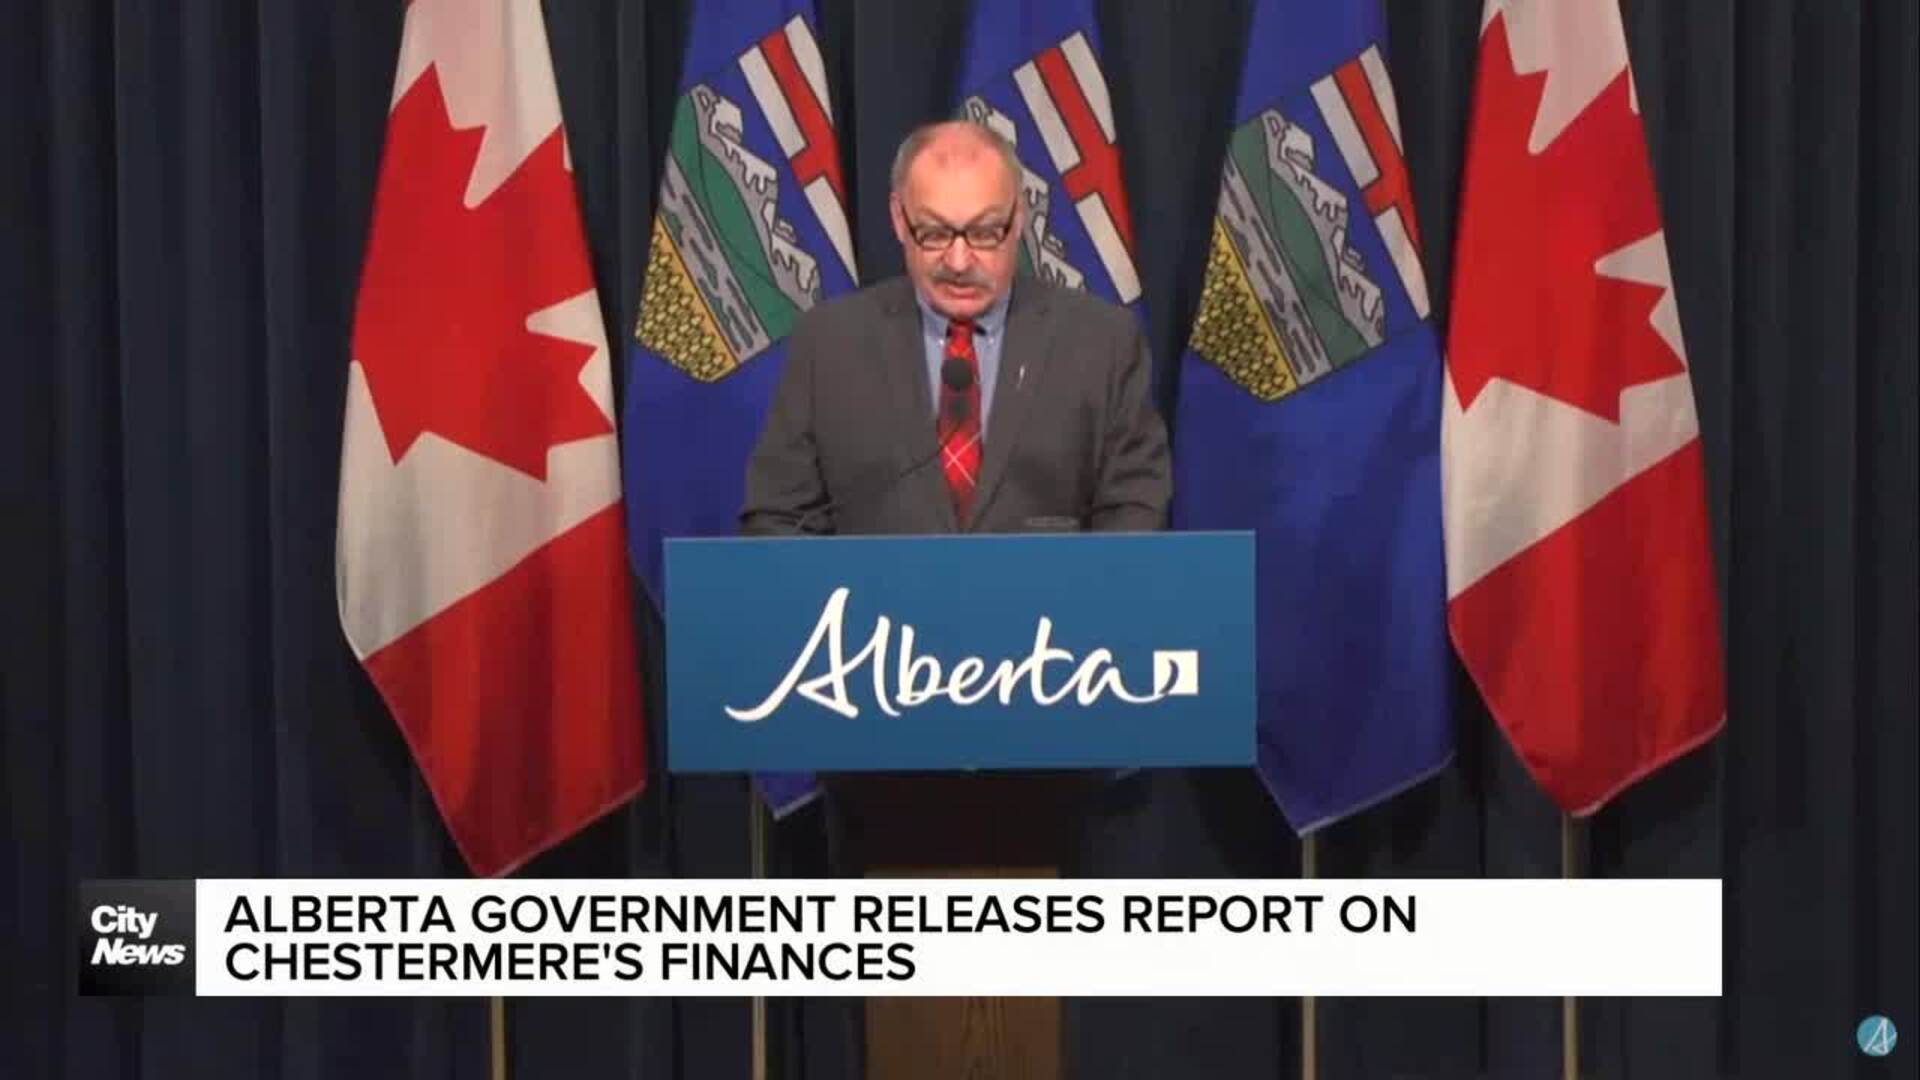 Alberta government releases report on Chestermere's finances